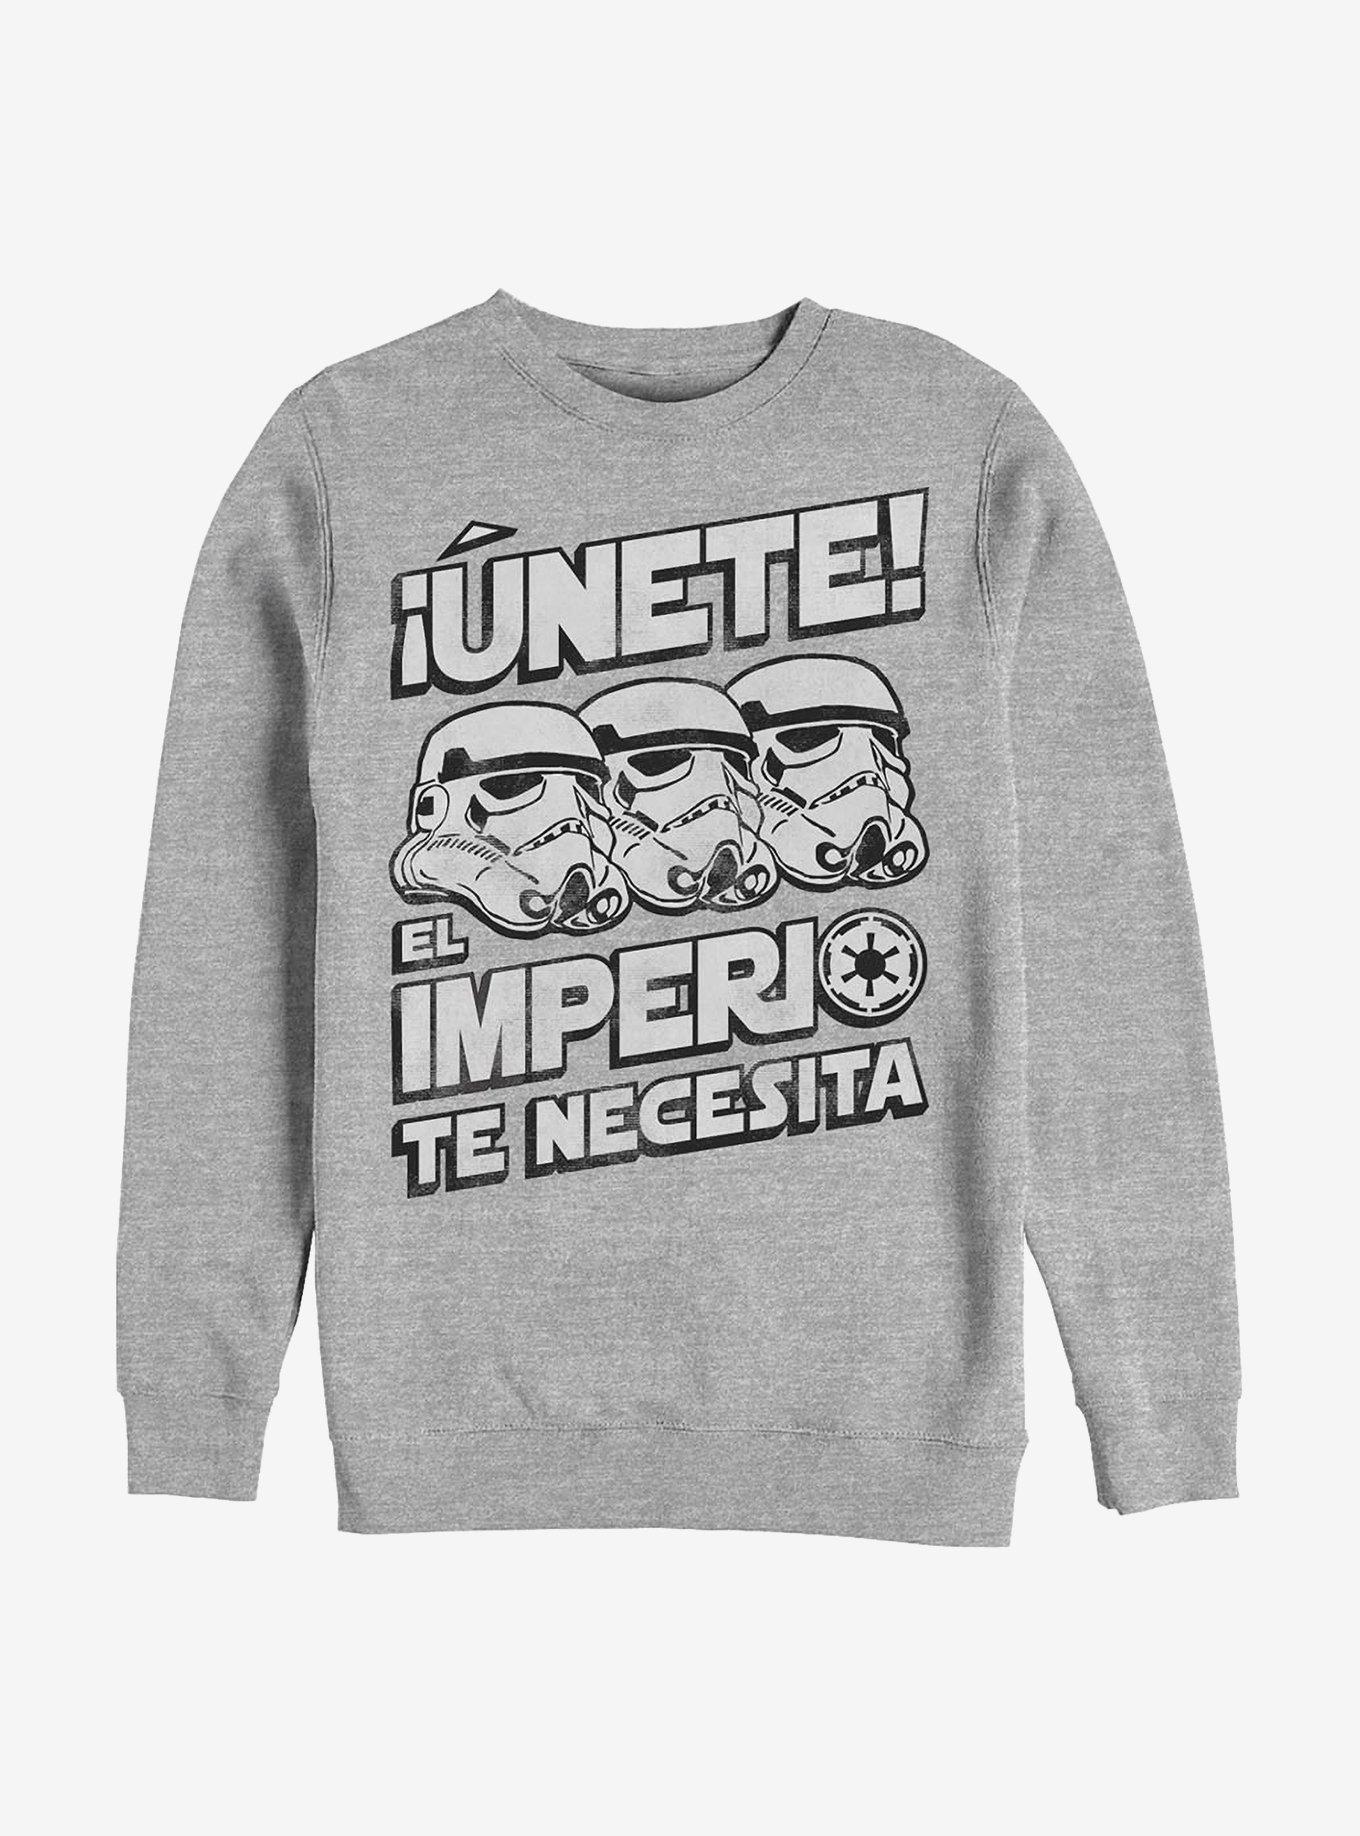 Star Wars Unete Crew Sweatshirt